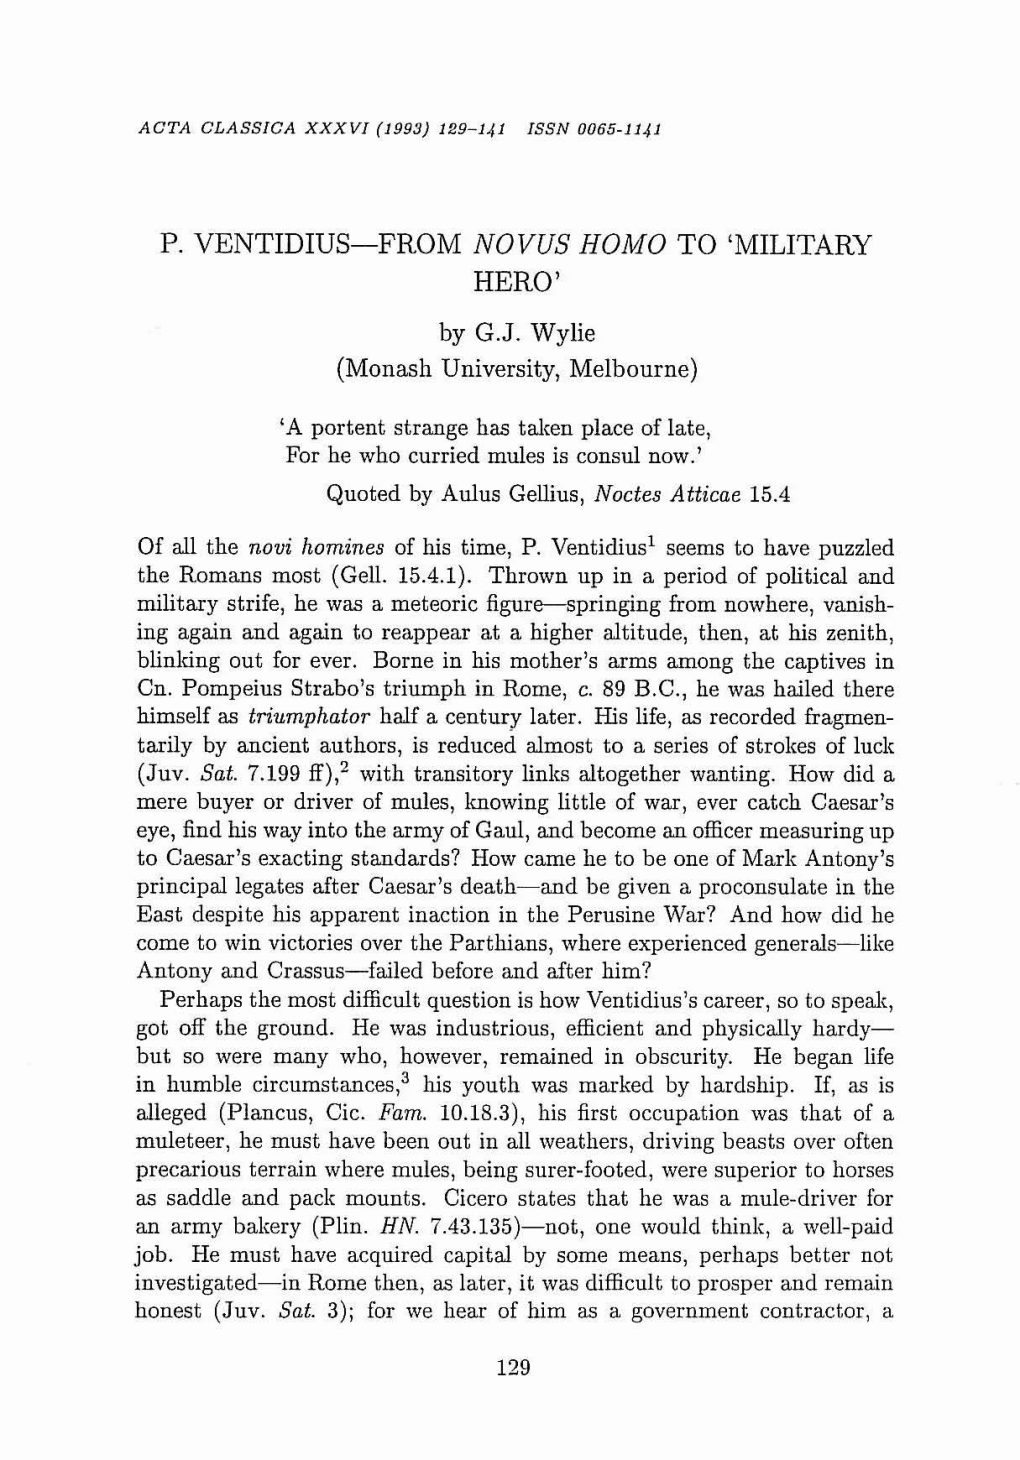 P. Ventidius-From Novus Homo to 'Military Hero'